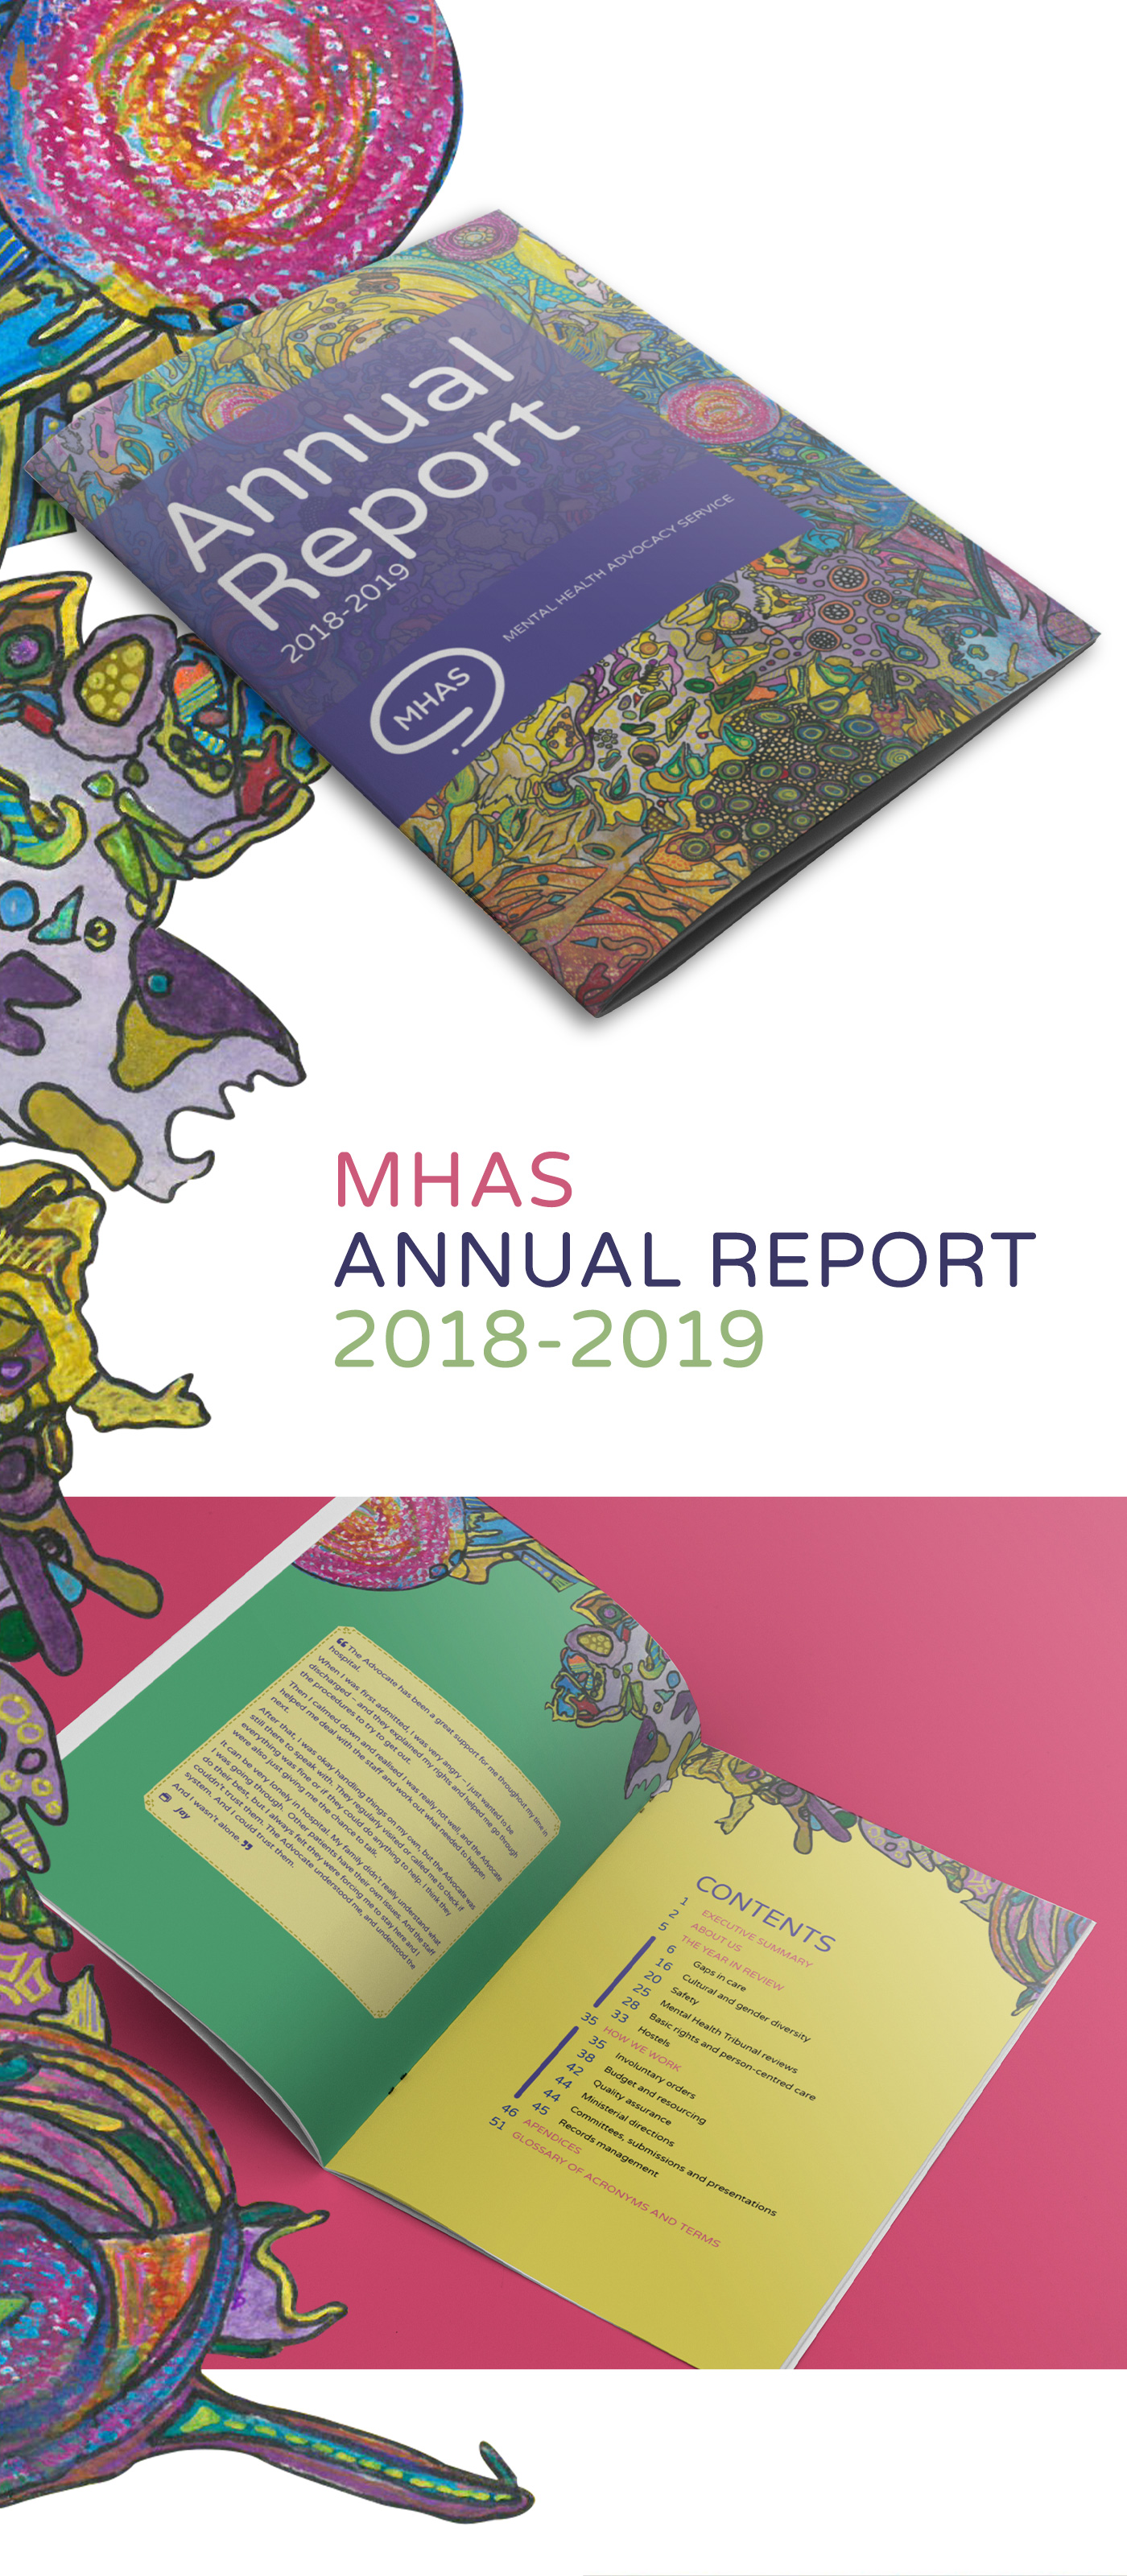 MHAS ANNUAL REPORT 2018-2019 MOCKUP